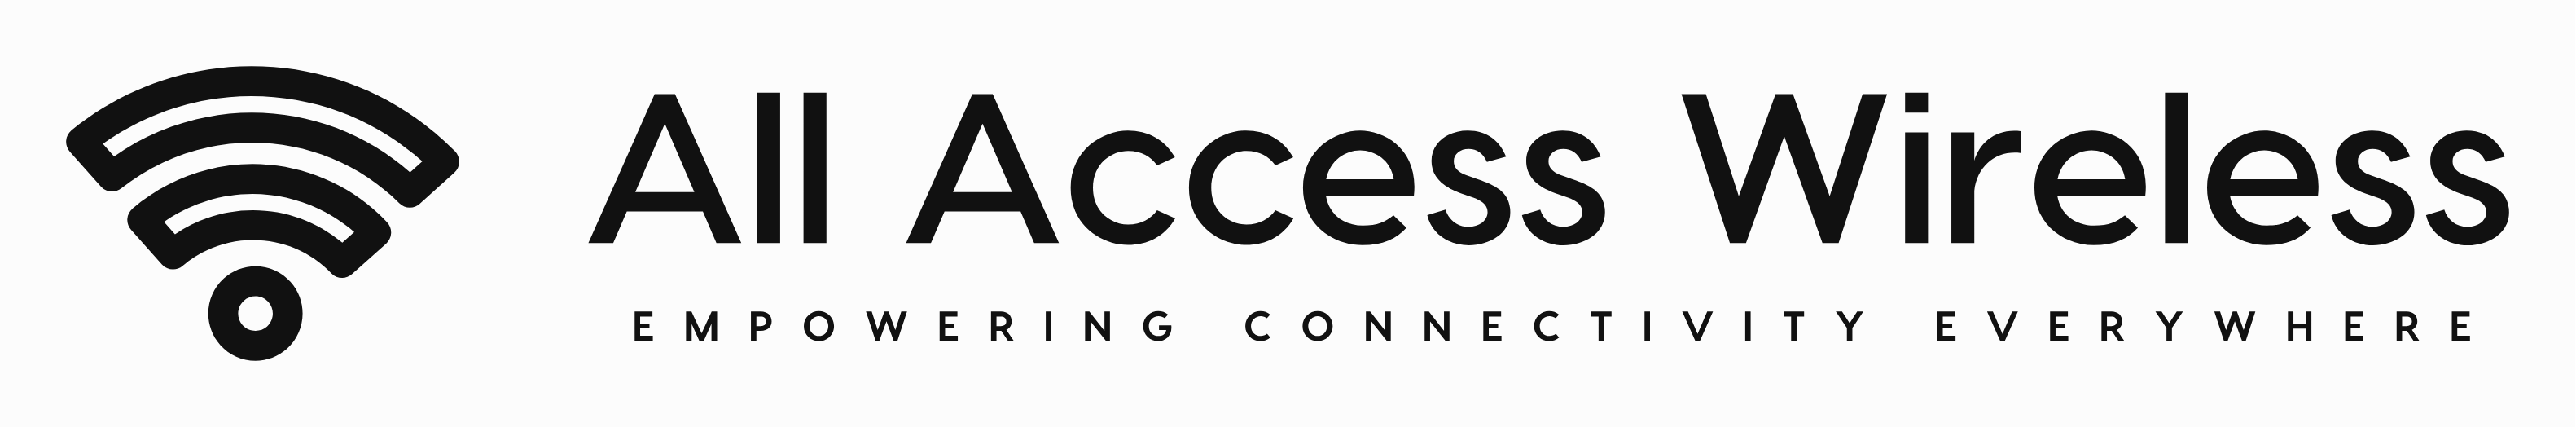 All Access Wireless